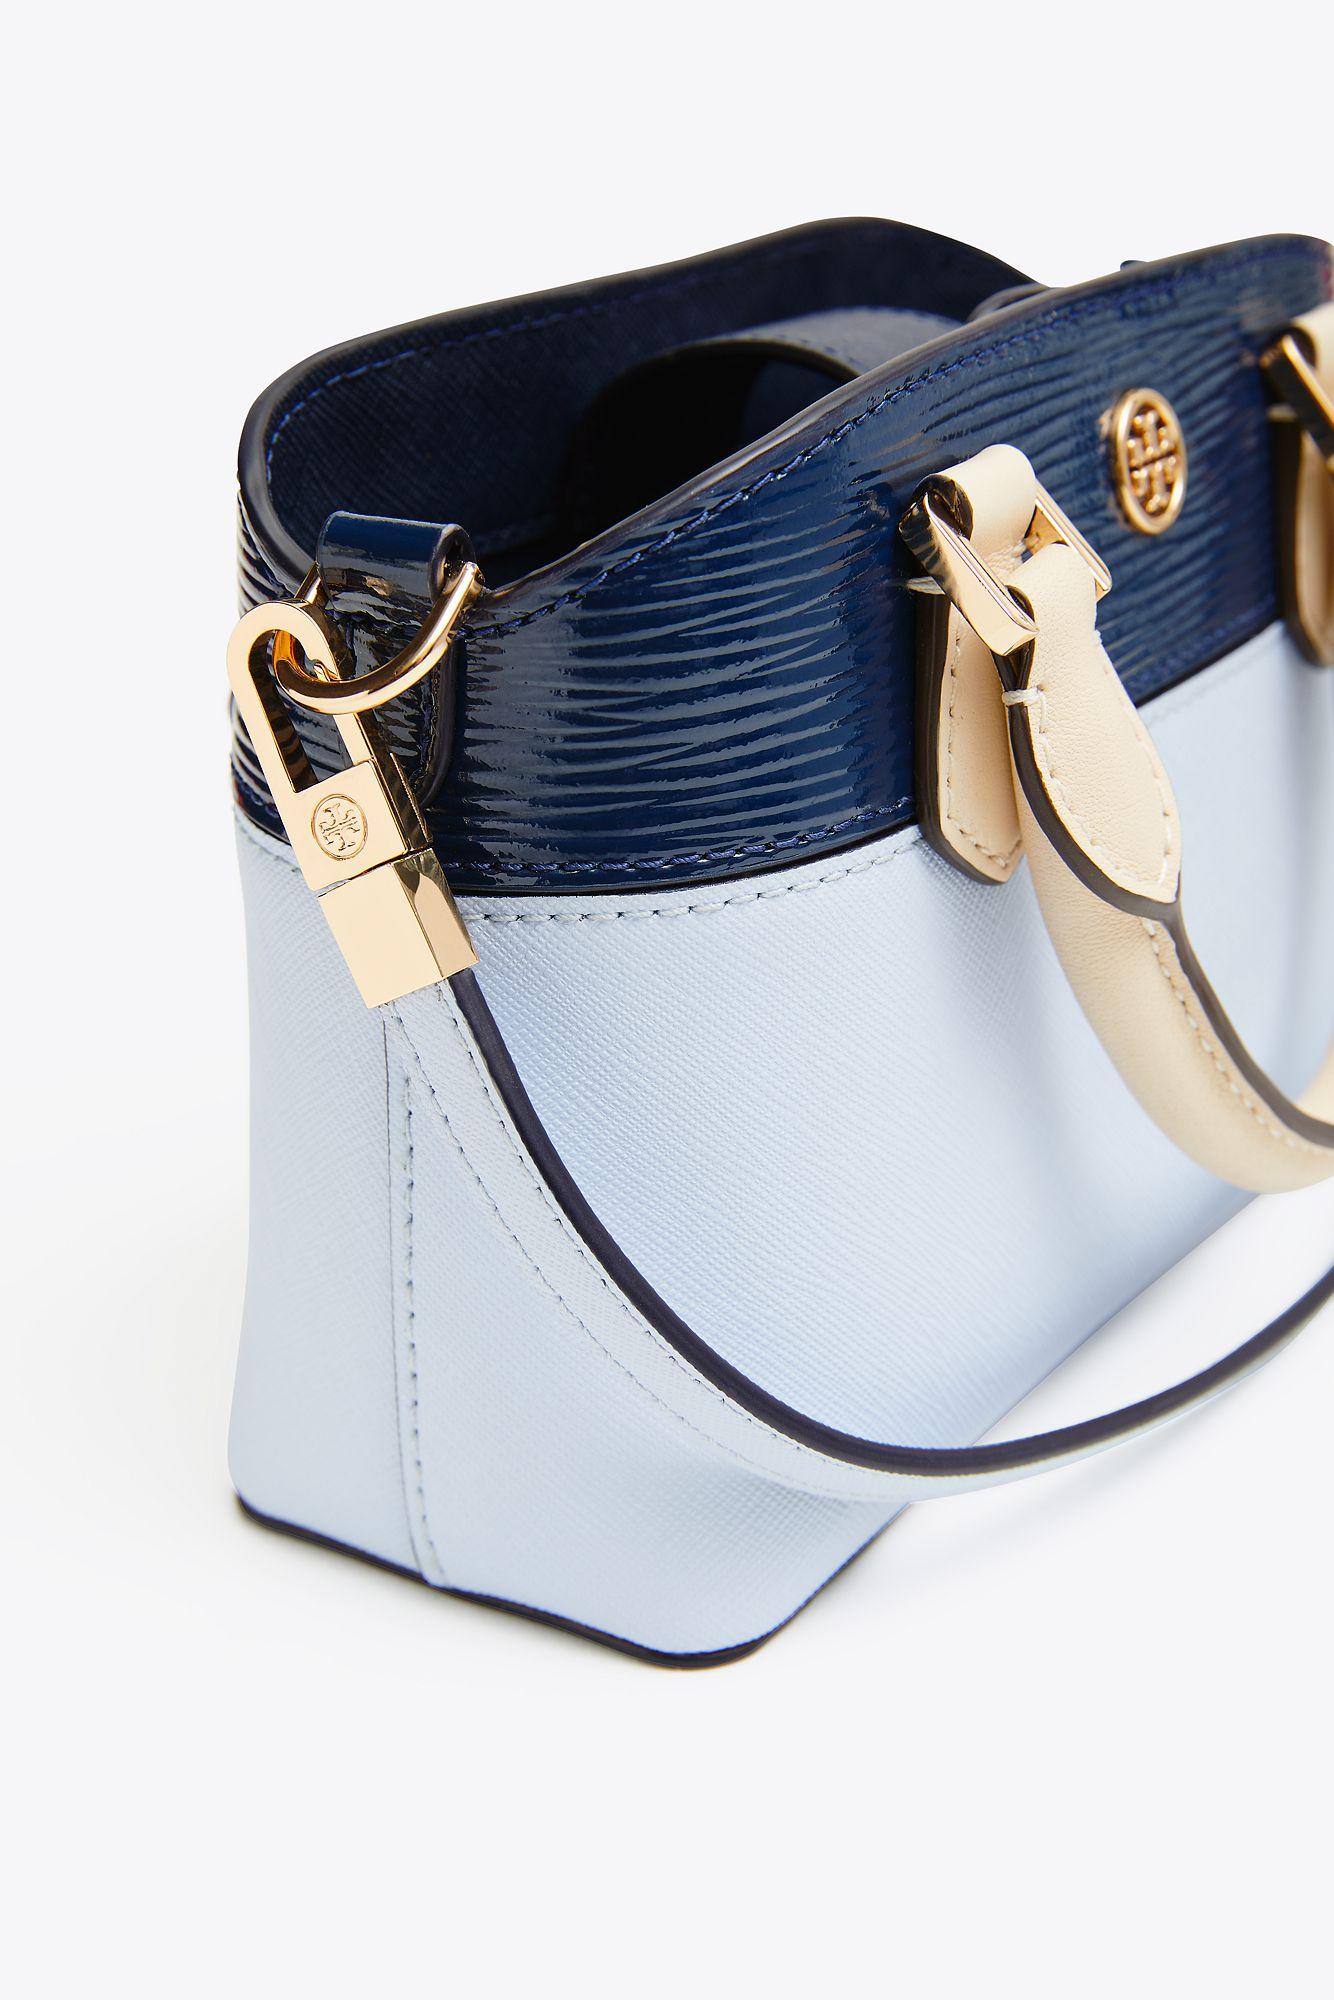 Tory Burch Robinson Color-block Top-handle Mini Bag in Blue